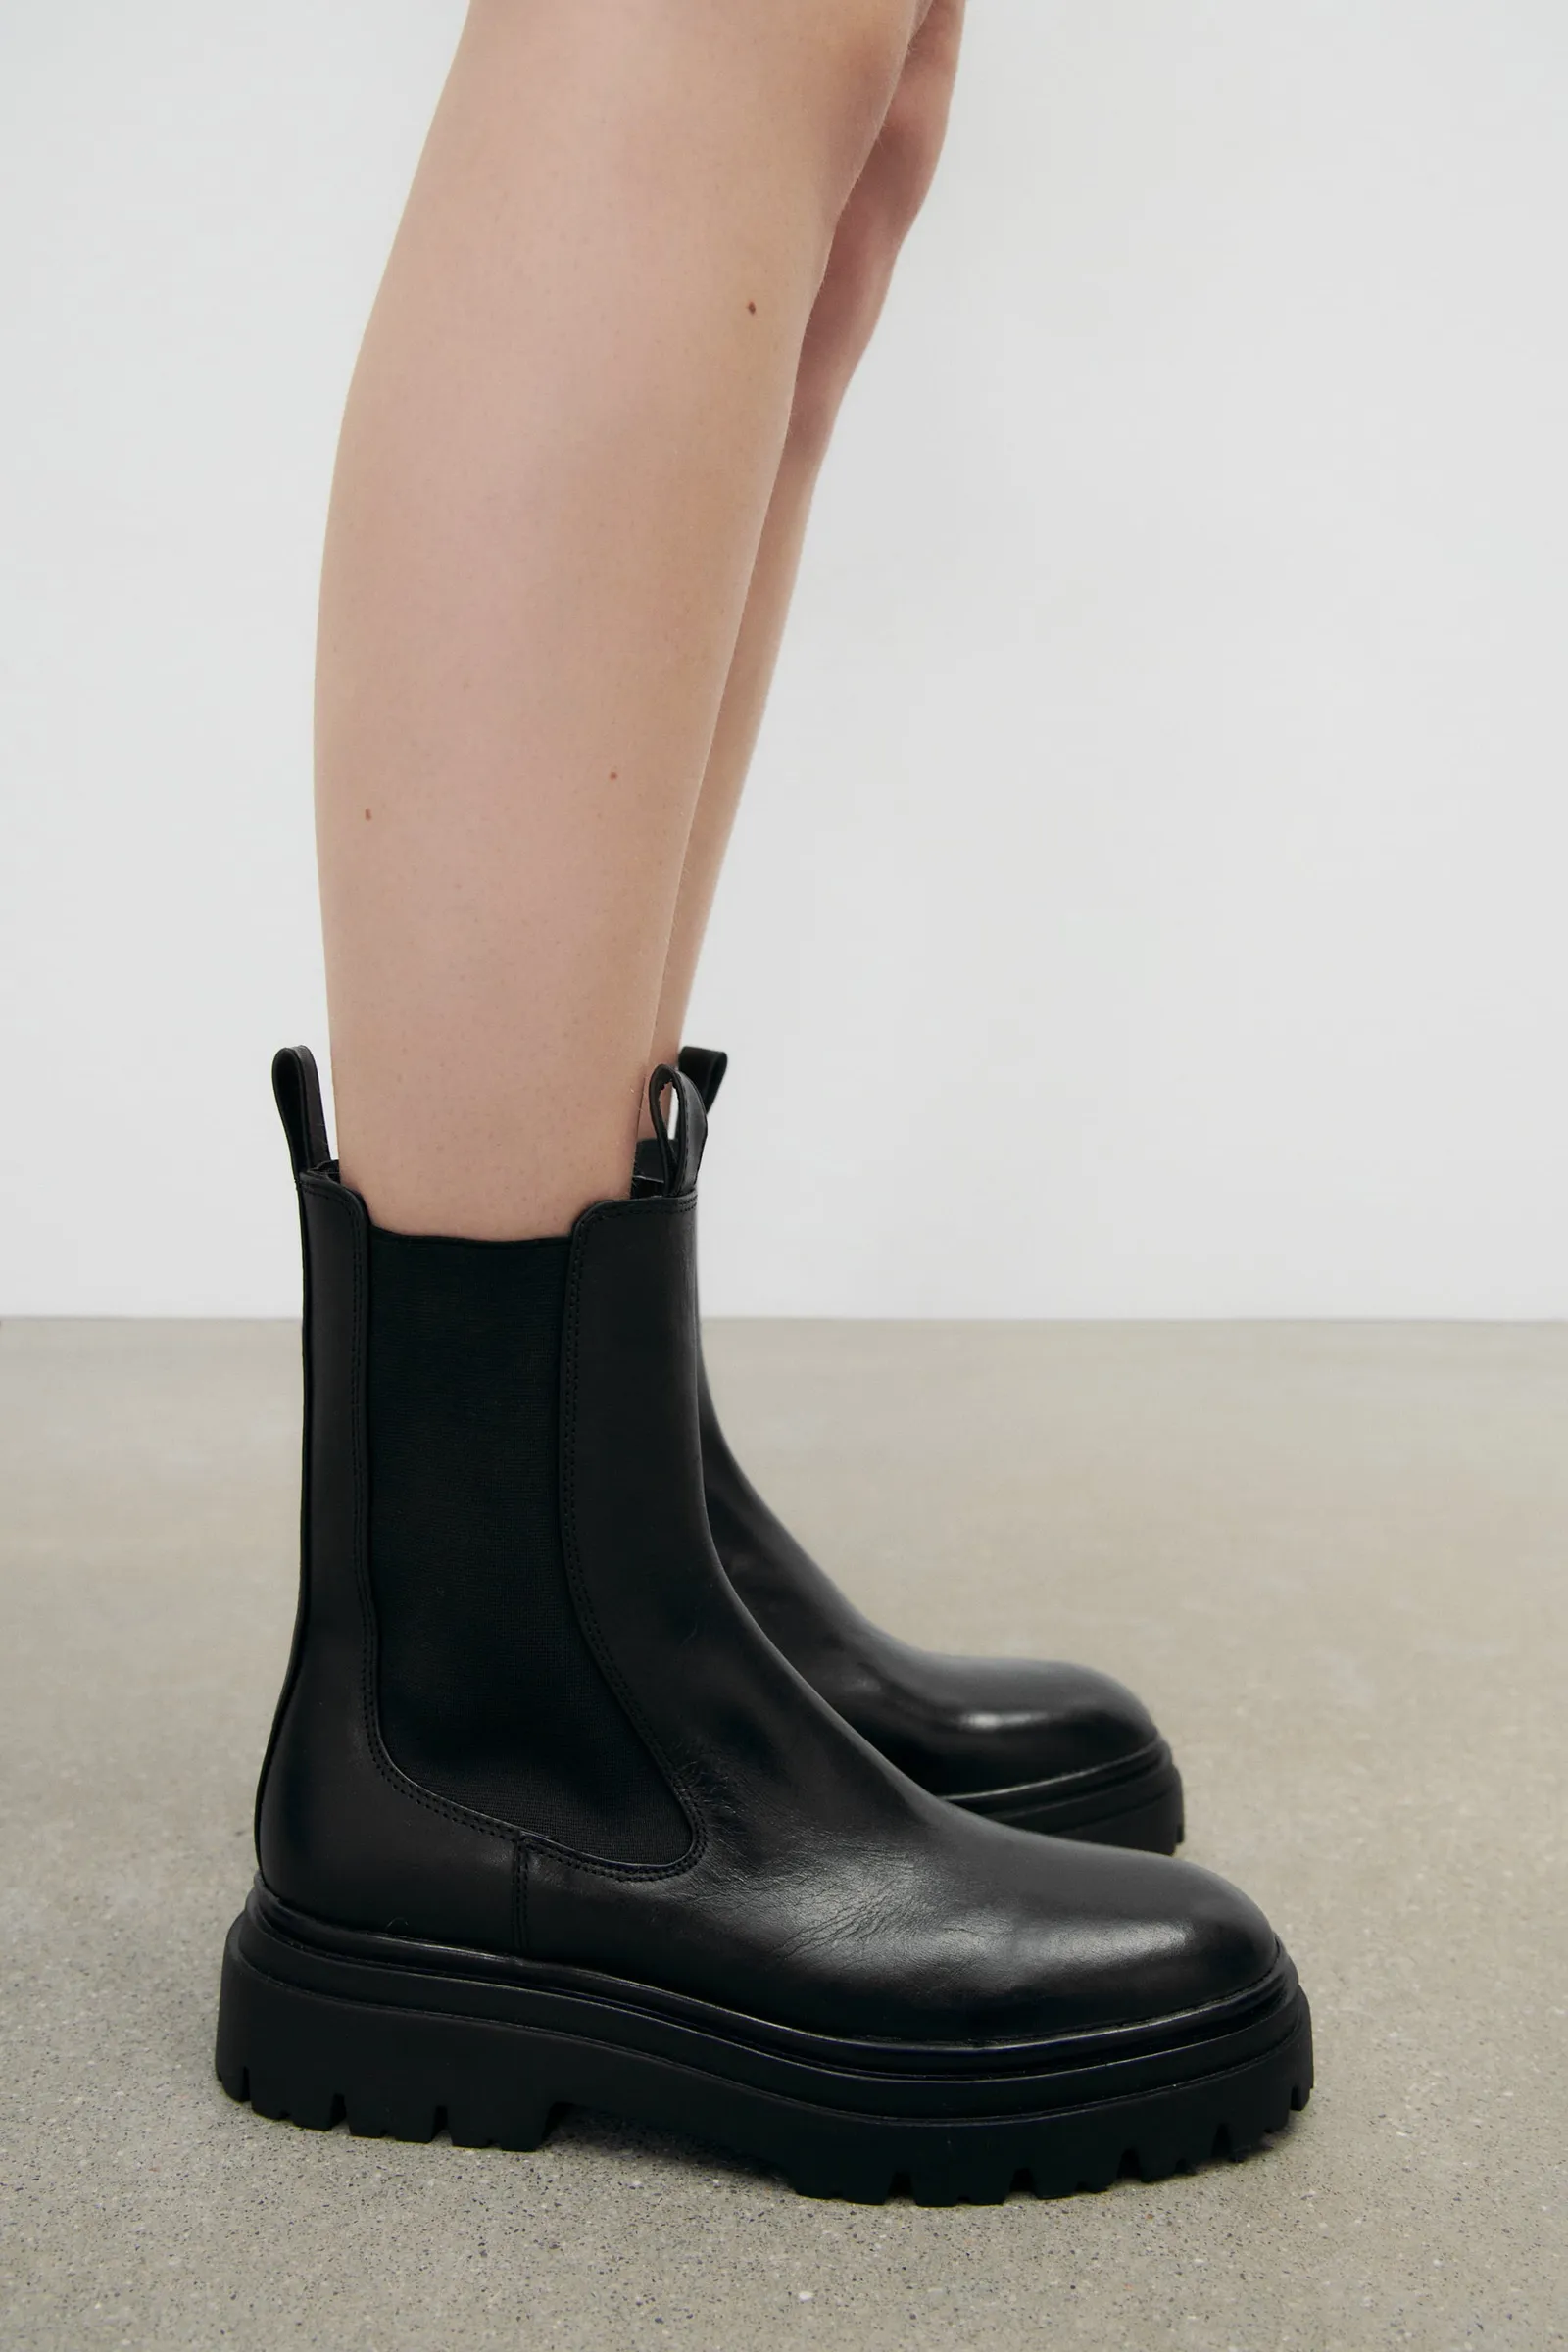 Tips Merawat Sepatu Boots di Musim Hujan Supaya Awet dan Anti Bau